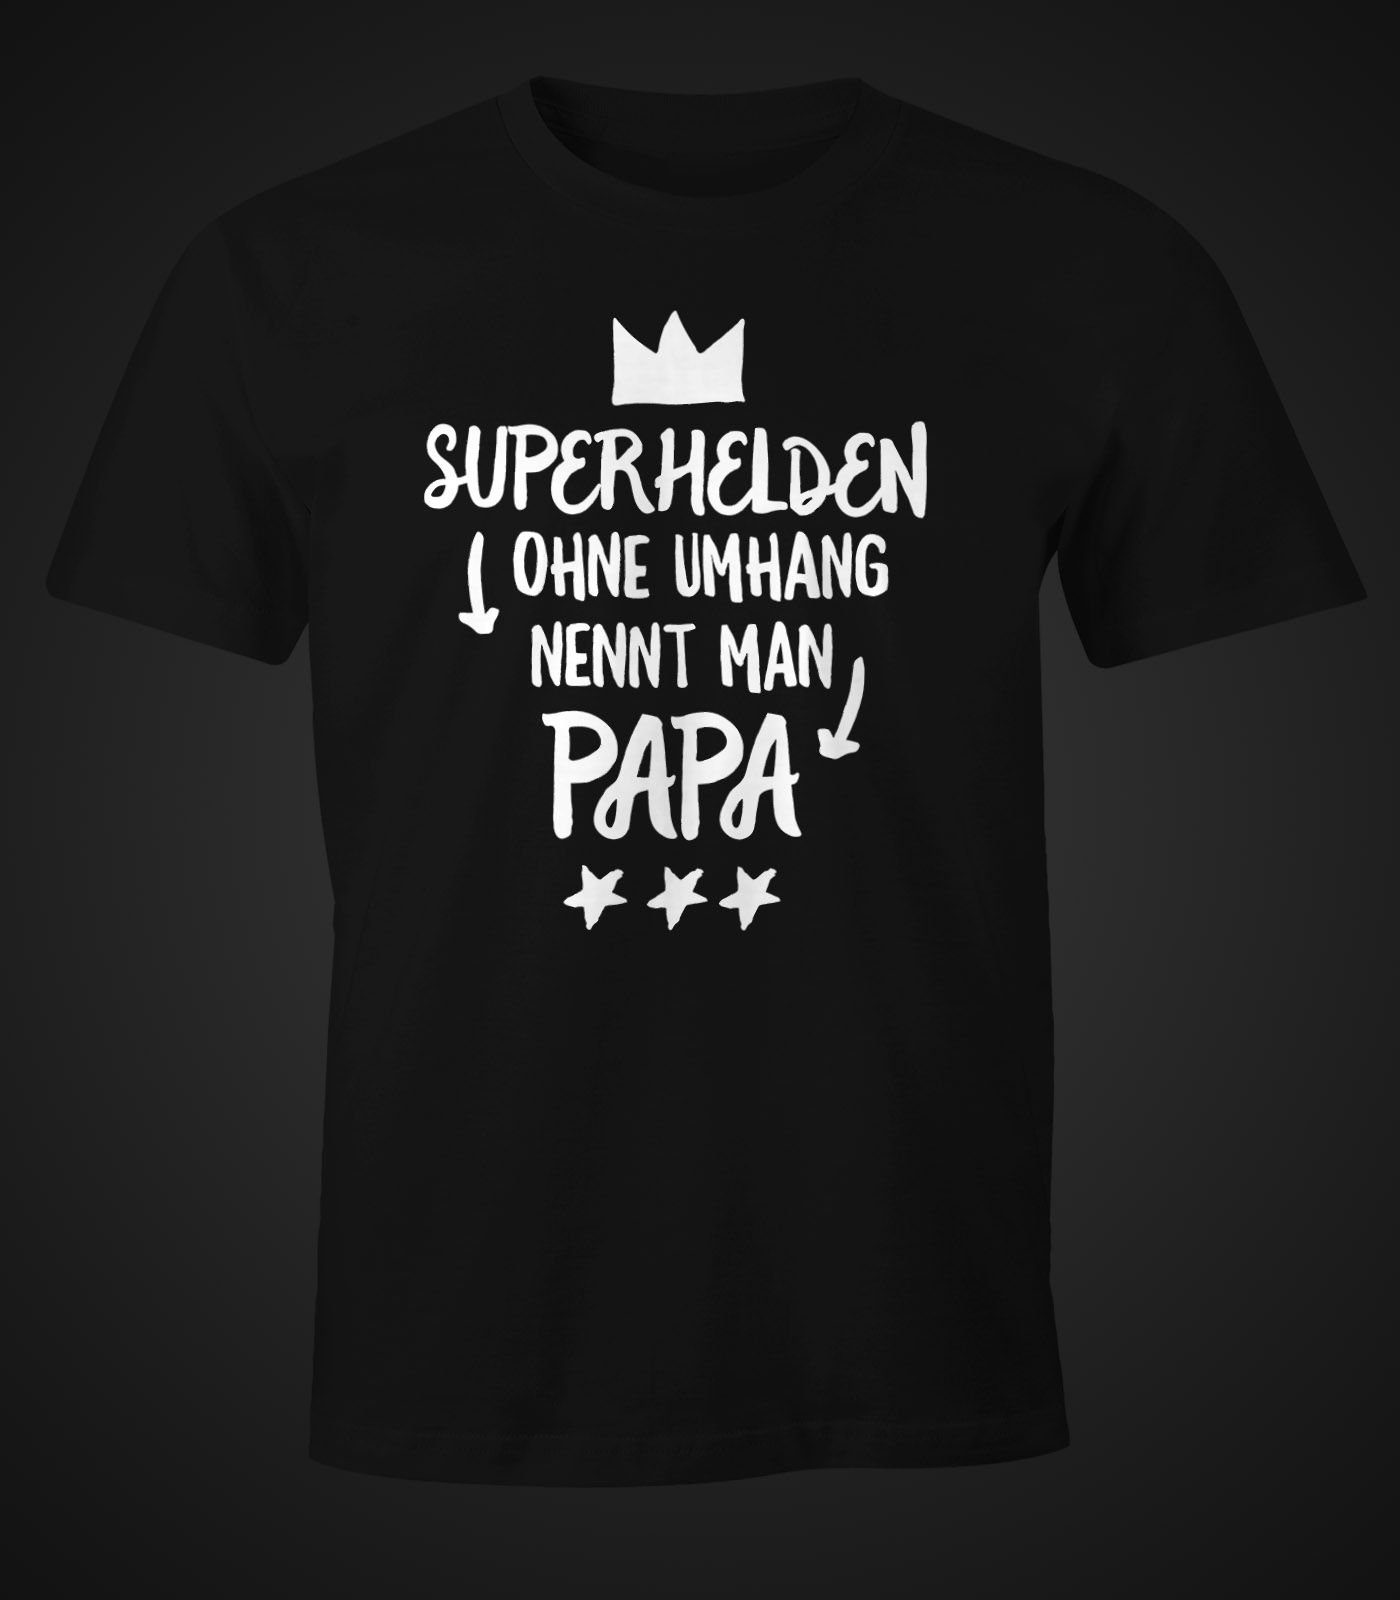 nennt Herren Fun-Shirt man mit Umhang MoonWorks schwarz Papa" ohne "Superhelden Print Moonworks® T-Shirt Print-Shirt